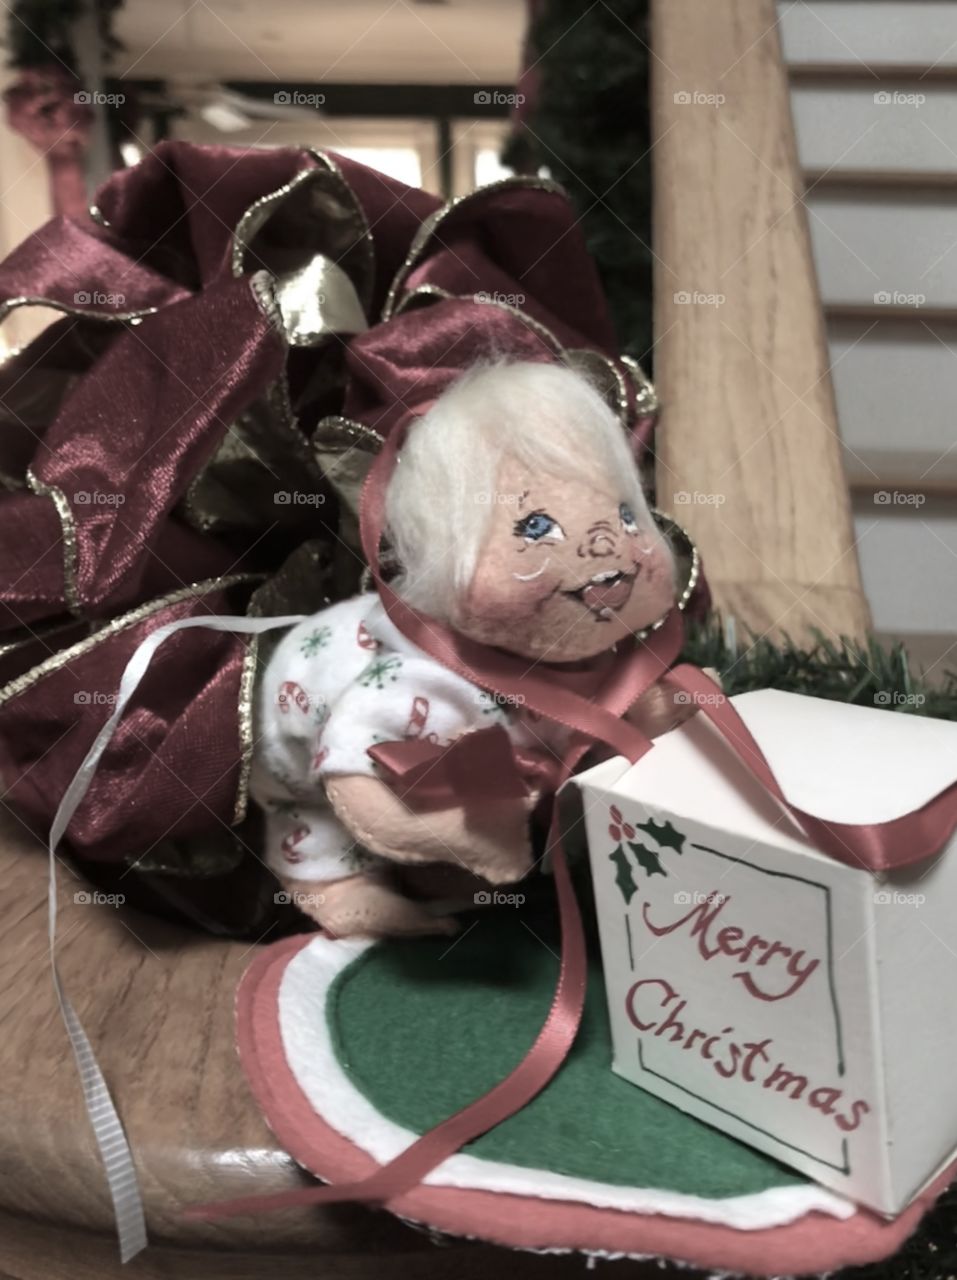 Creepy Christmas doll